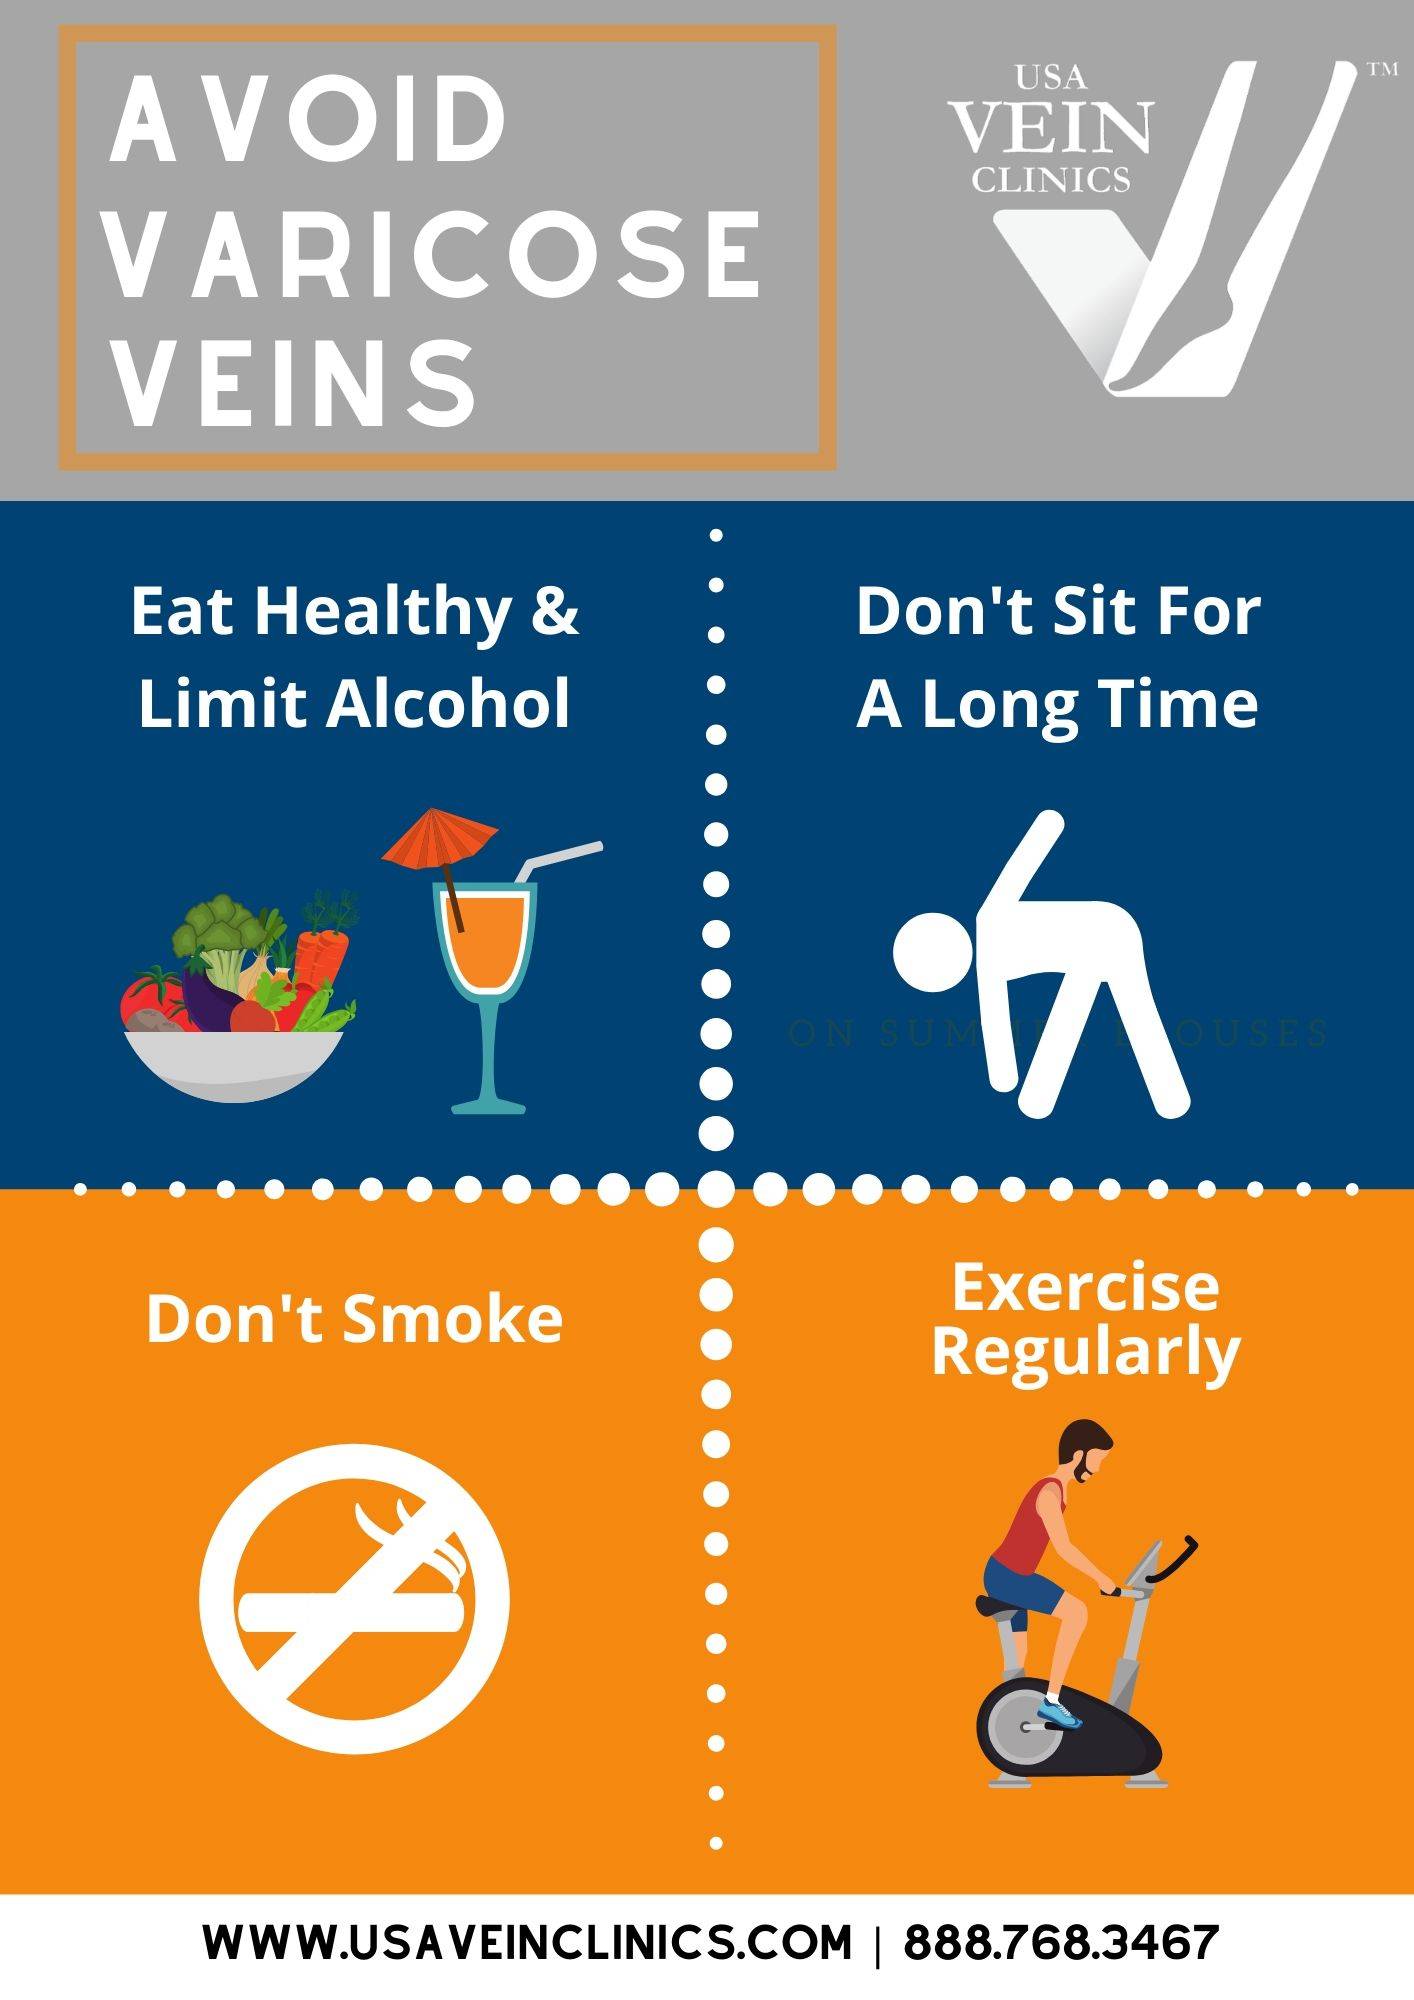 How To Prevent Varicose Veins: 6 Effective Methods